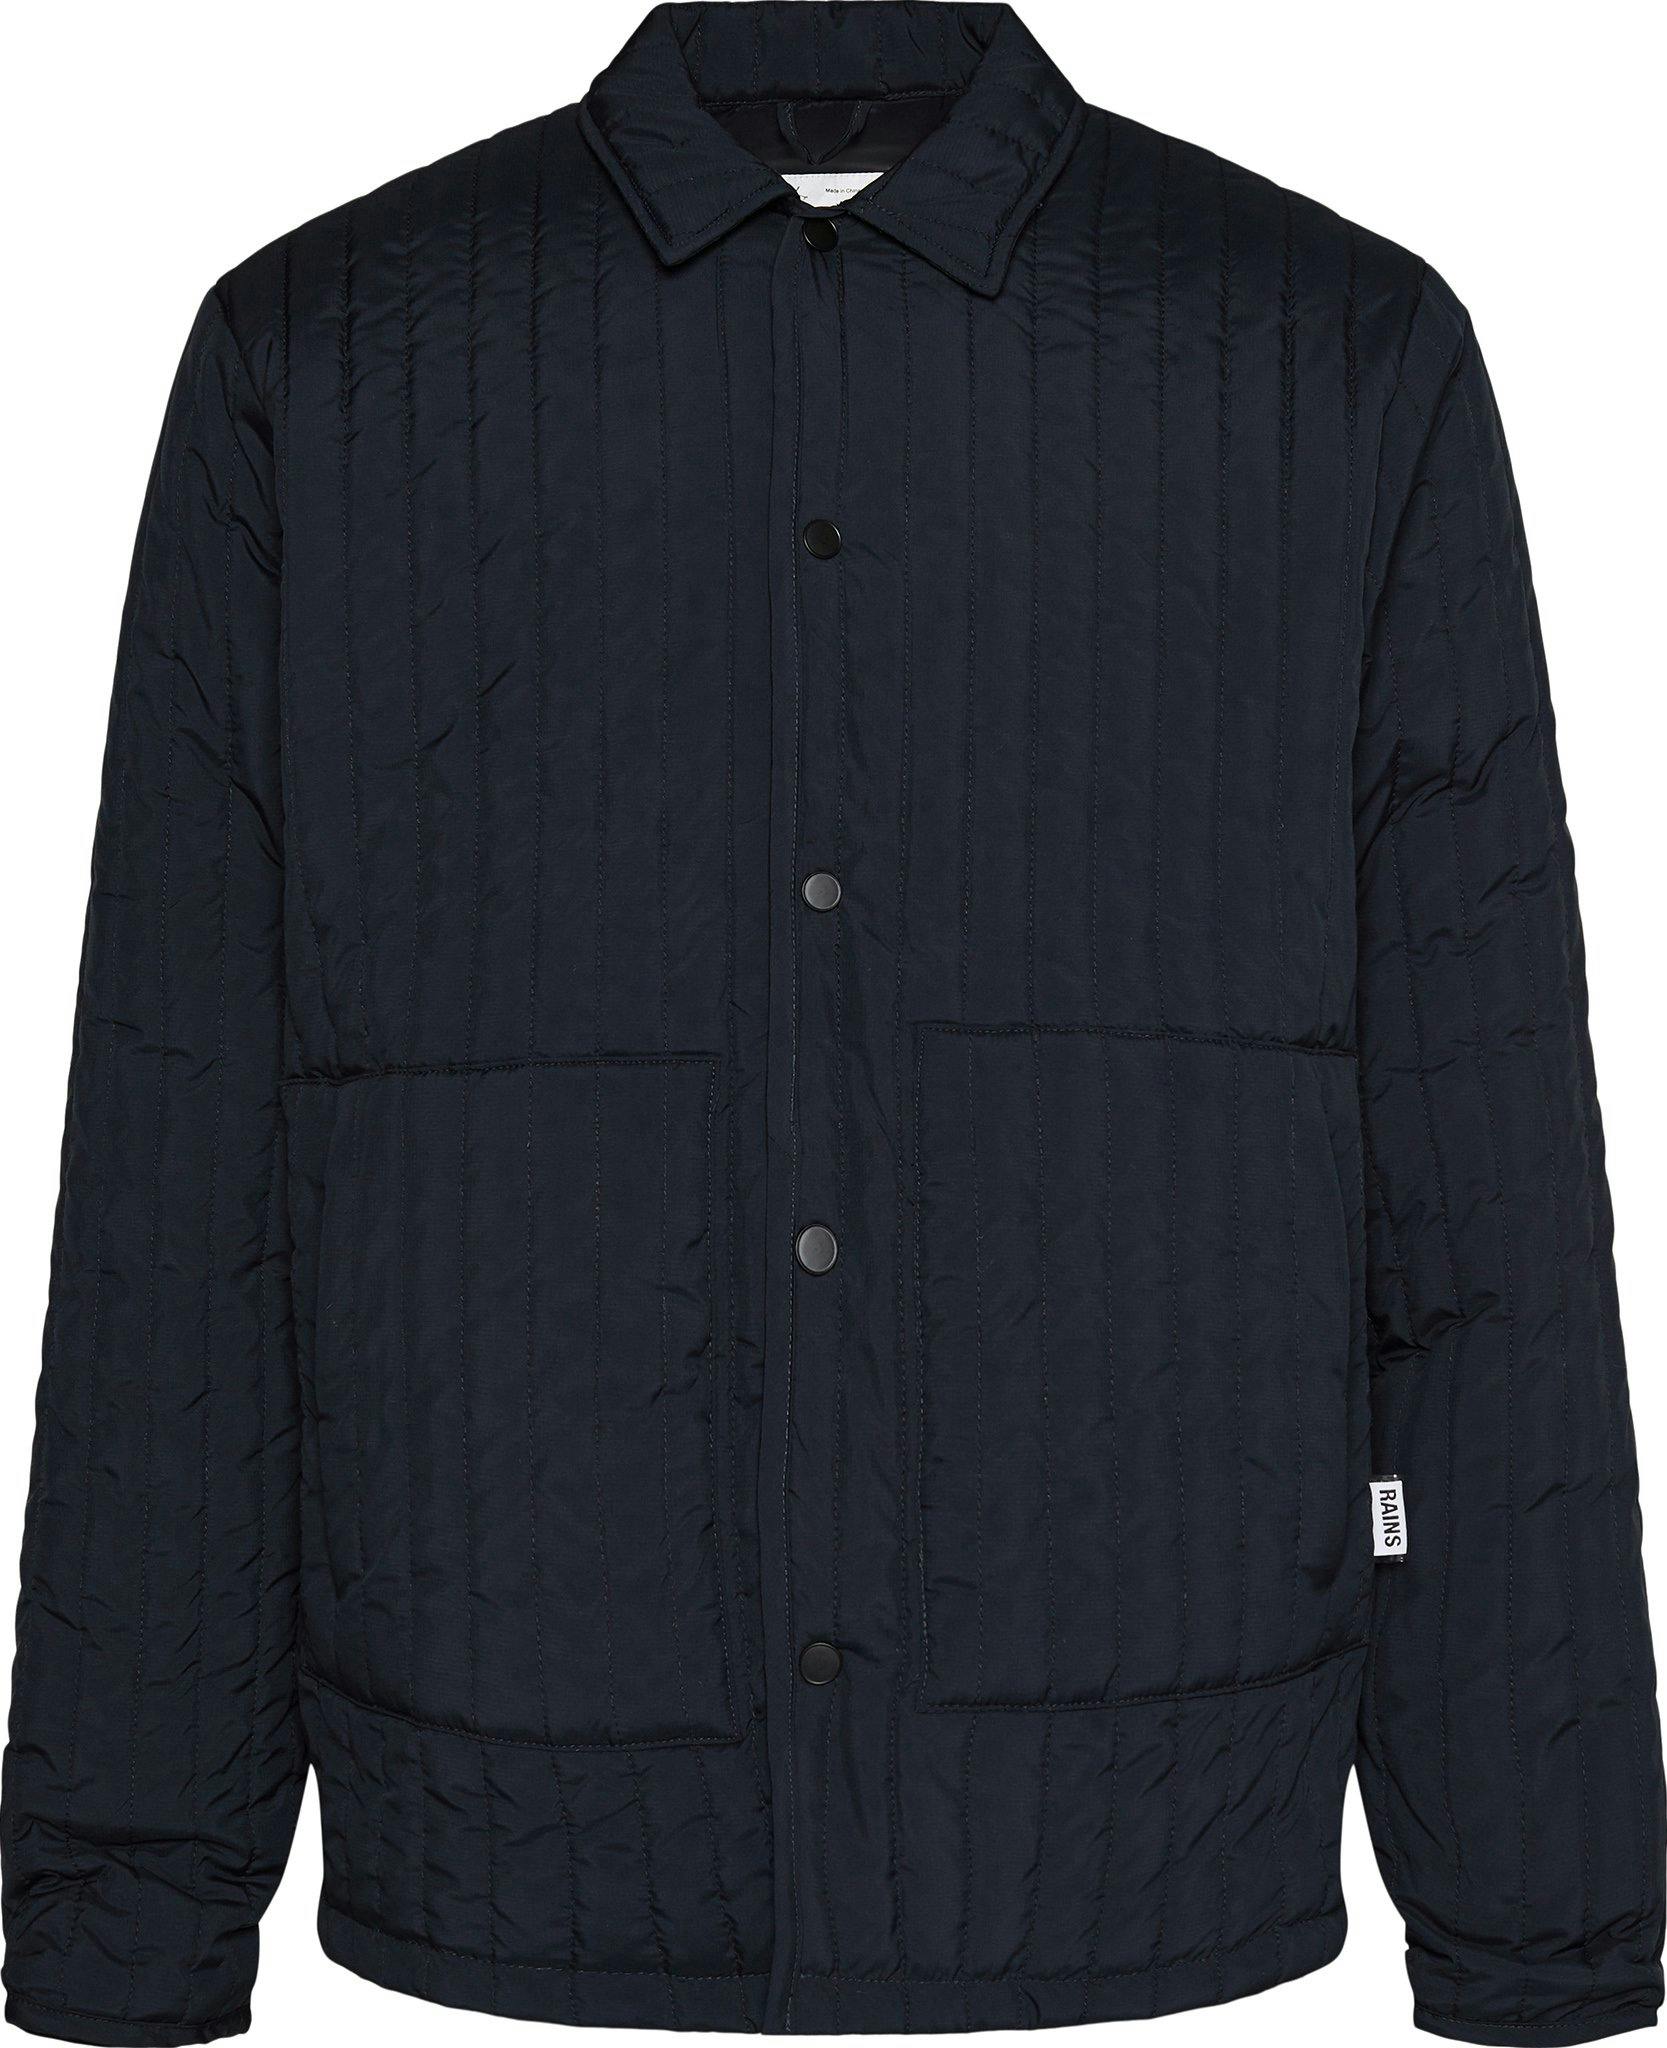 Product image for Liner Shirt Jacket - Unisex